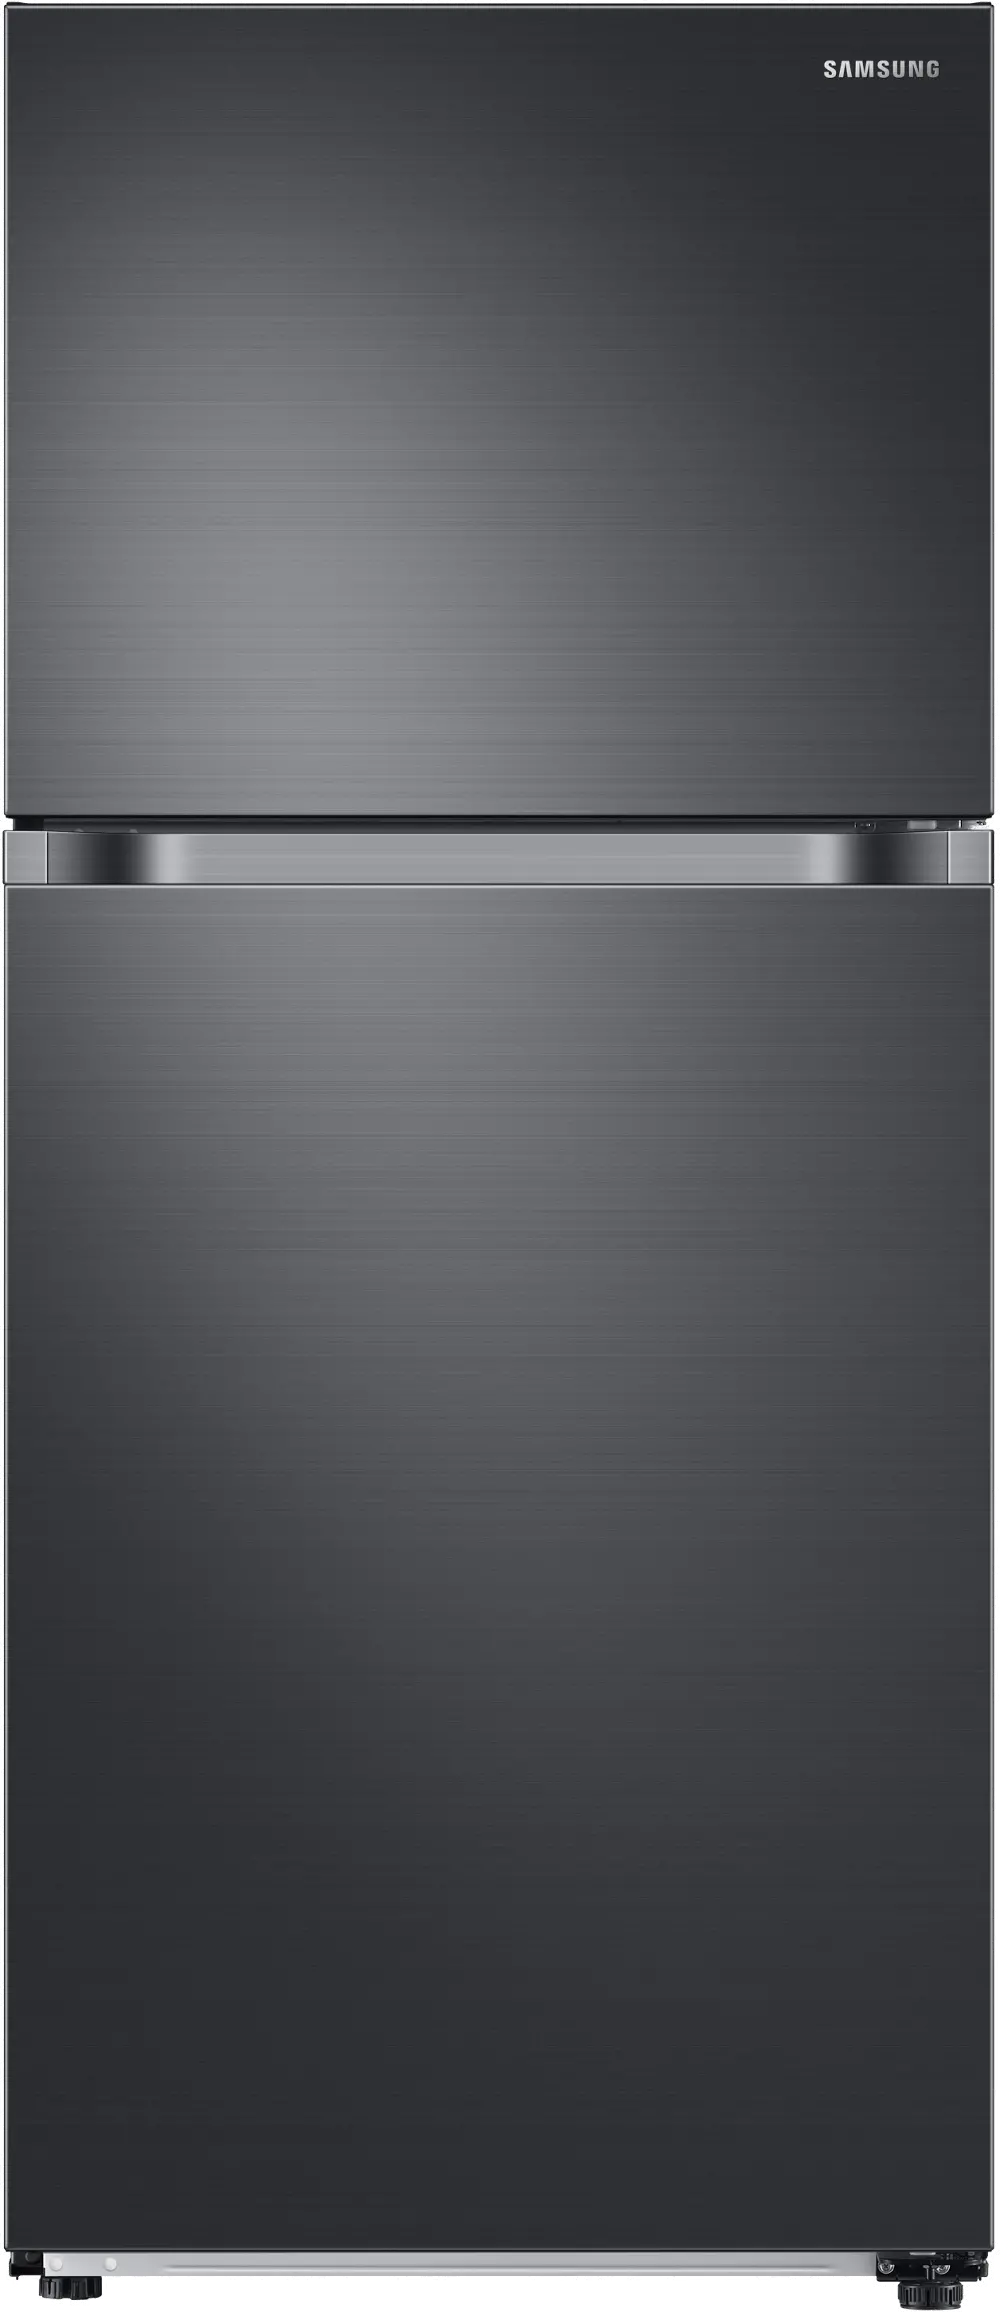 RT18M6215SG Samsung 18 cu ft Top Freezer Refrigerator - 29 W Black Stainless Steel-1